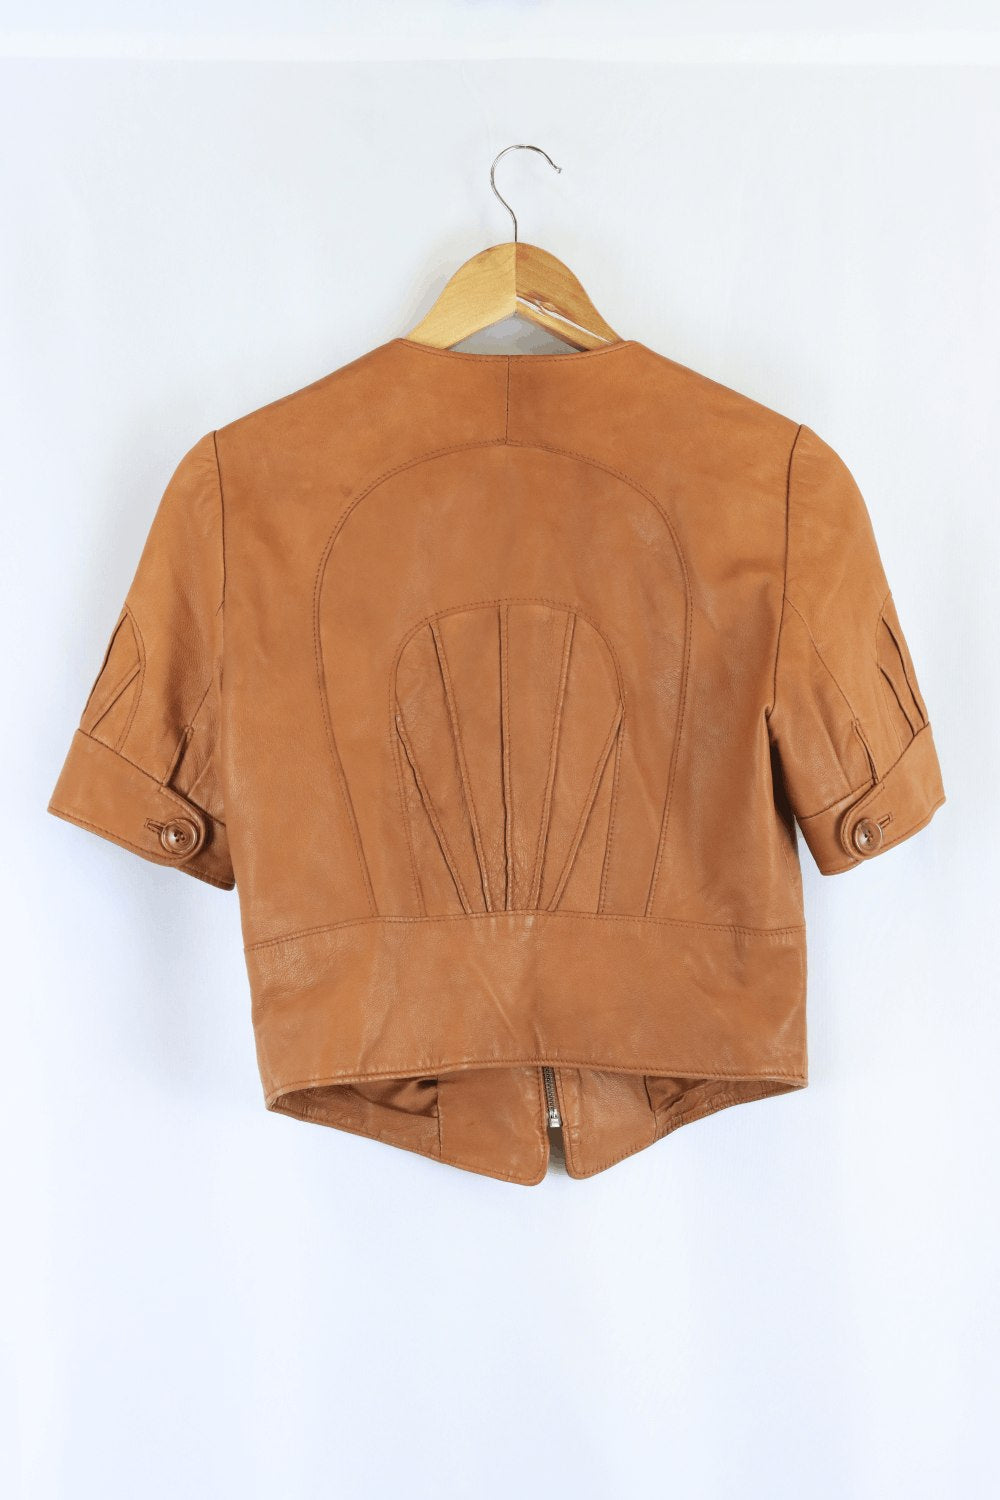 Arabella Ramsay Brown Leather Short Sleeve Jacket 10